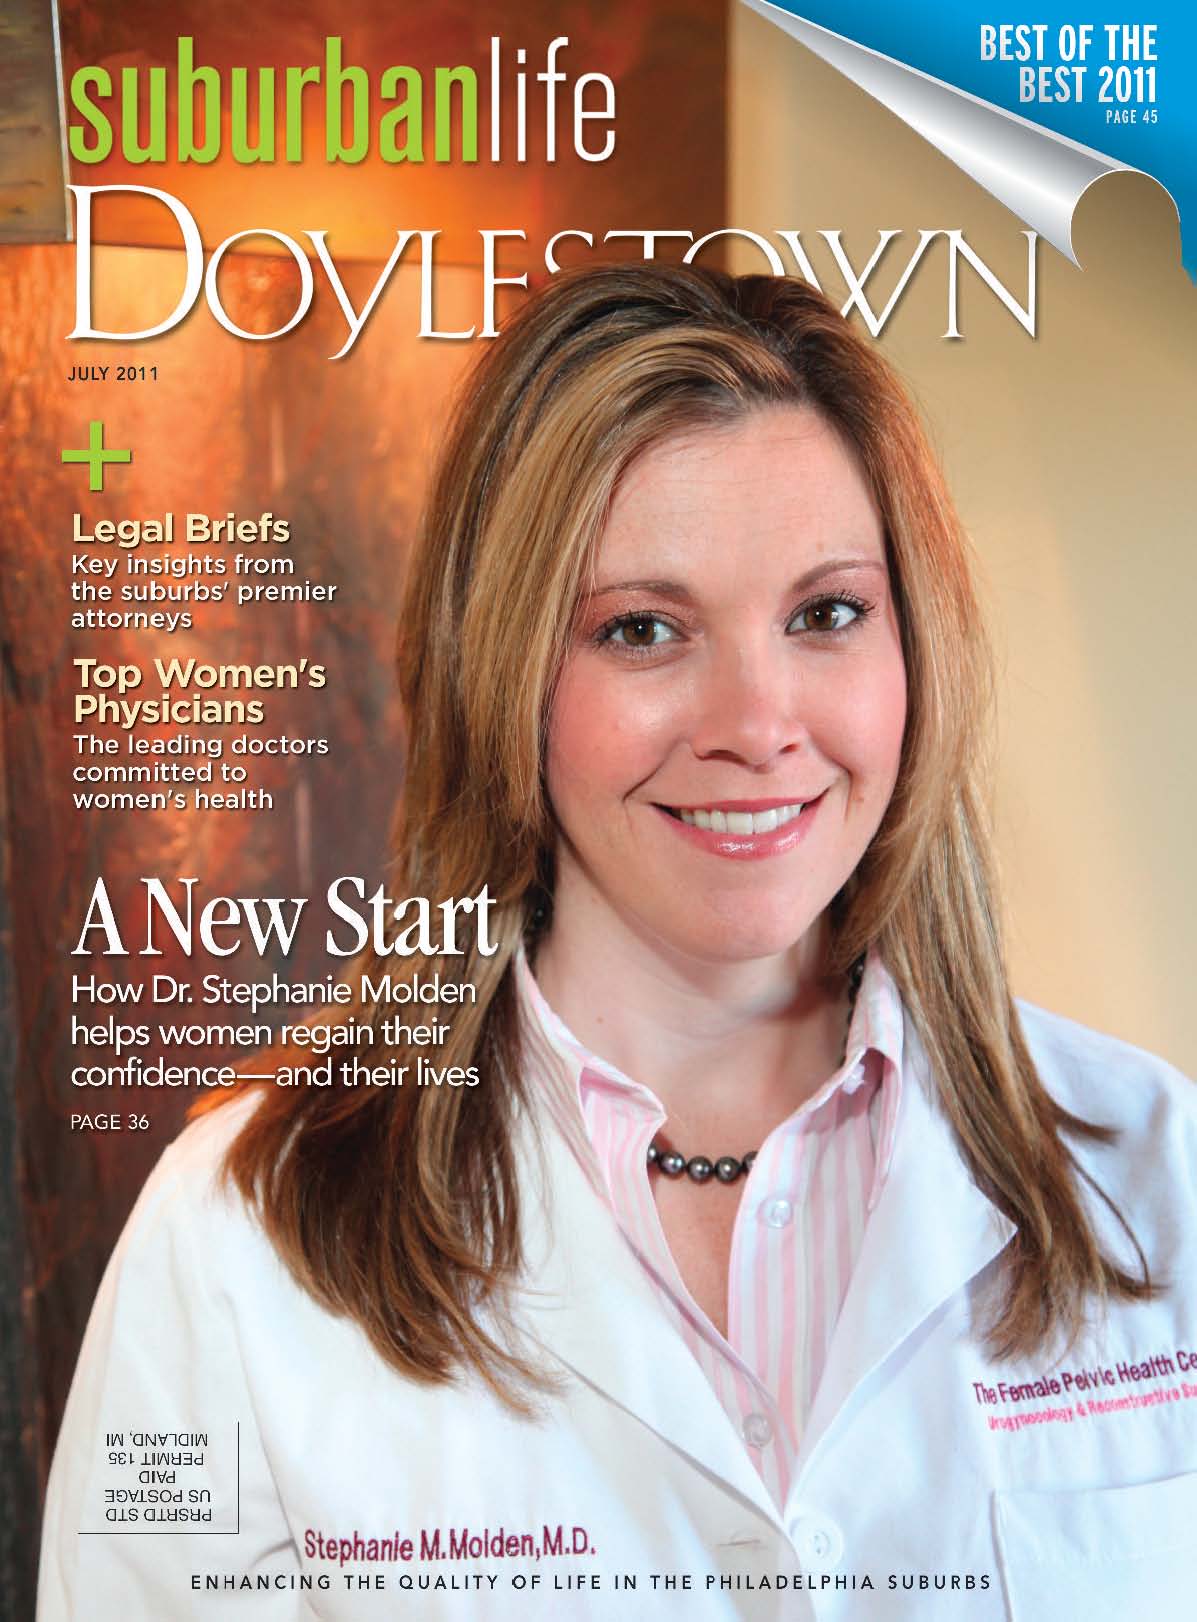 Dr. Stephanie Molden in Suburban Life Doylestown magazine